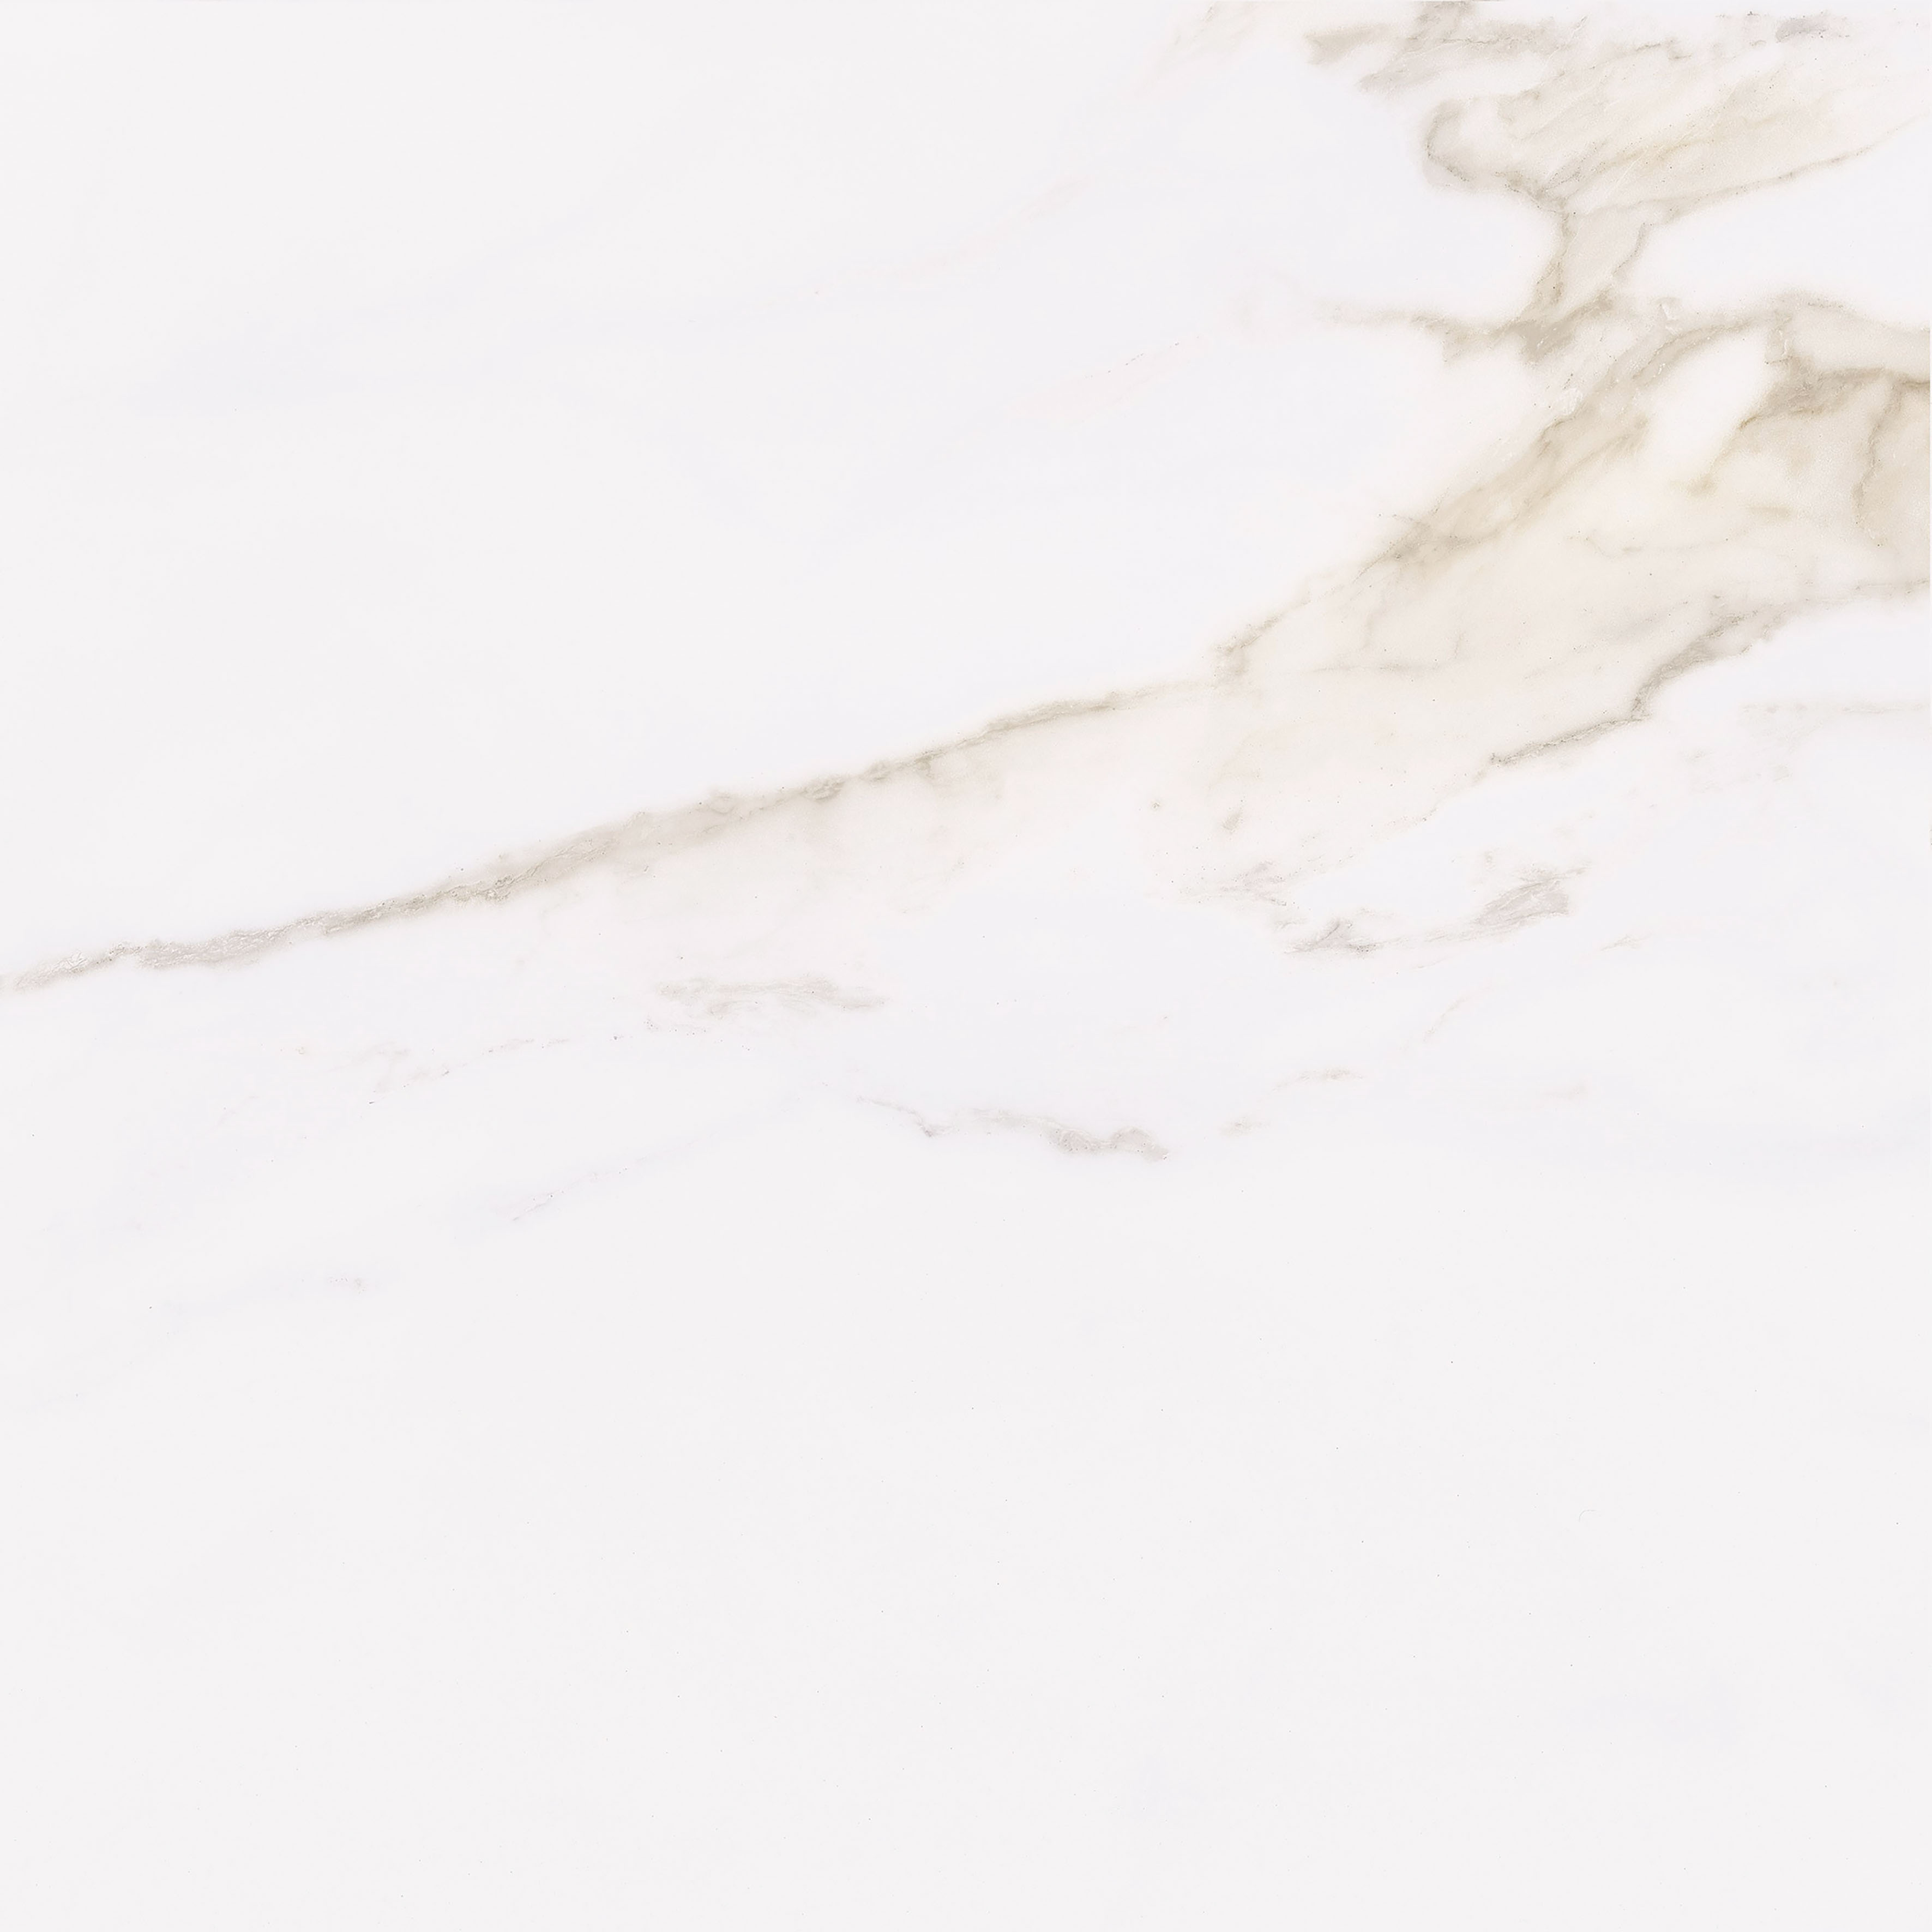 Vanezia Gres Kalmar Bodenfliesen Marmoroptik Weiß matt 60x60cm rekt. 